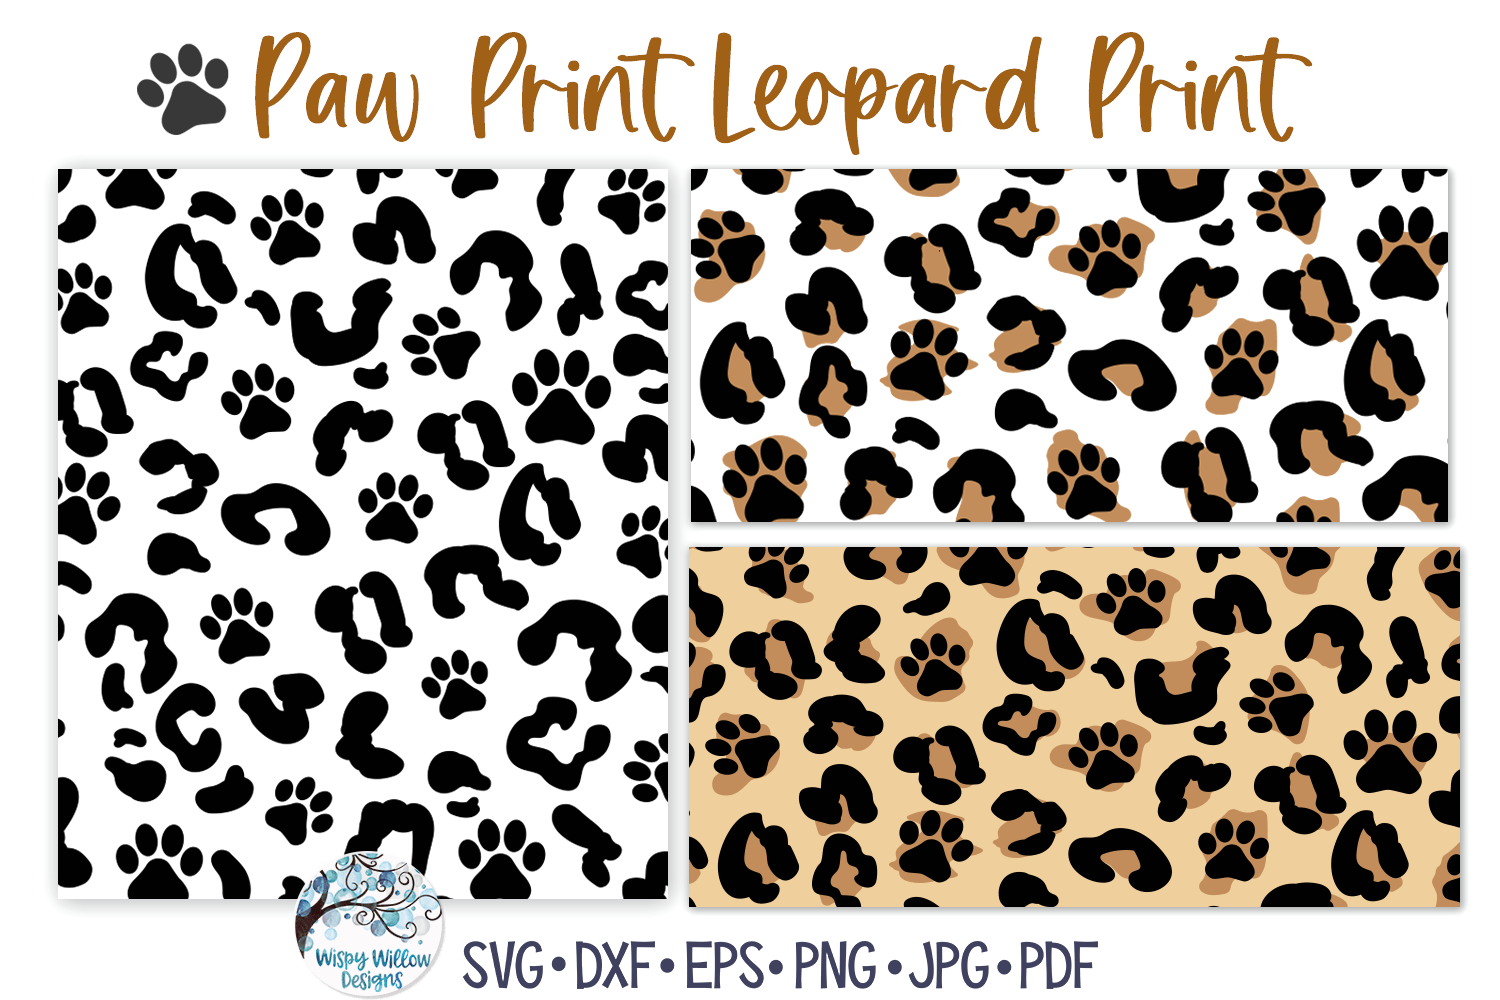 Paw Print Leopard Print SVG | Animal Pattern Wispy Willow Designs Company